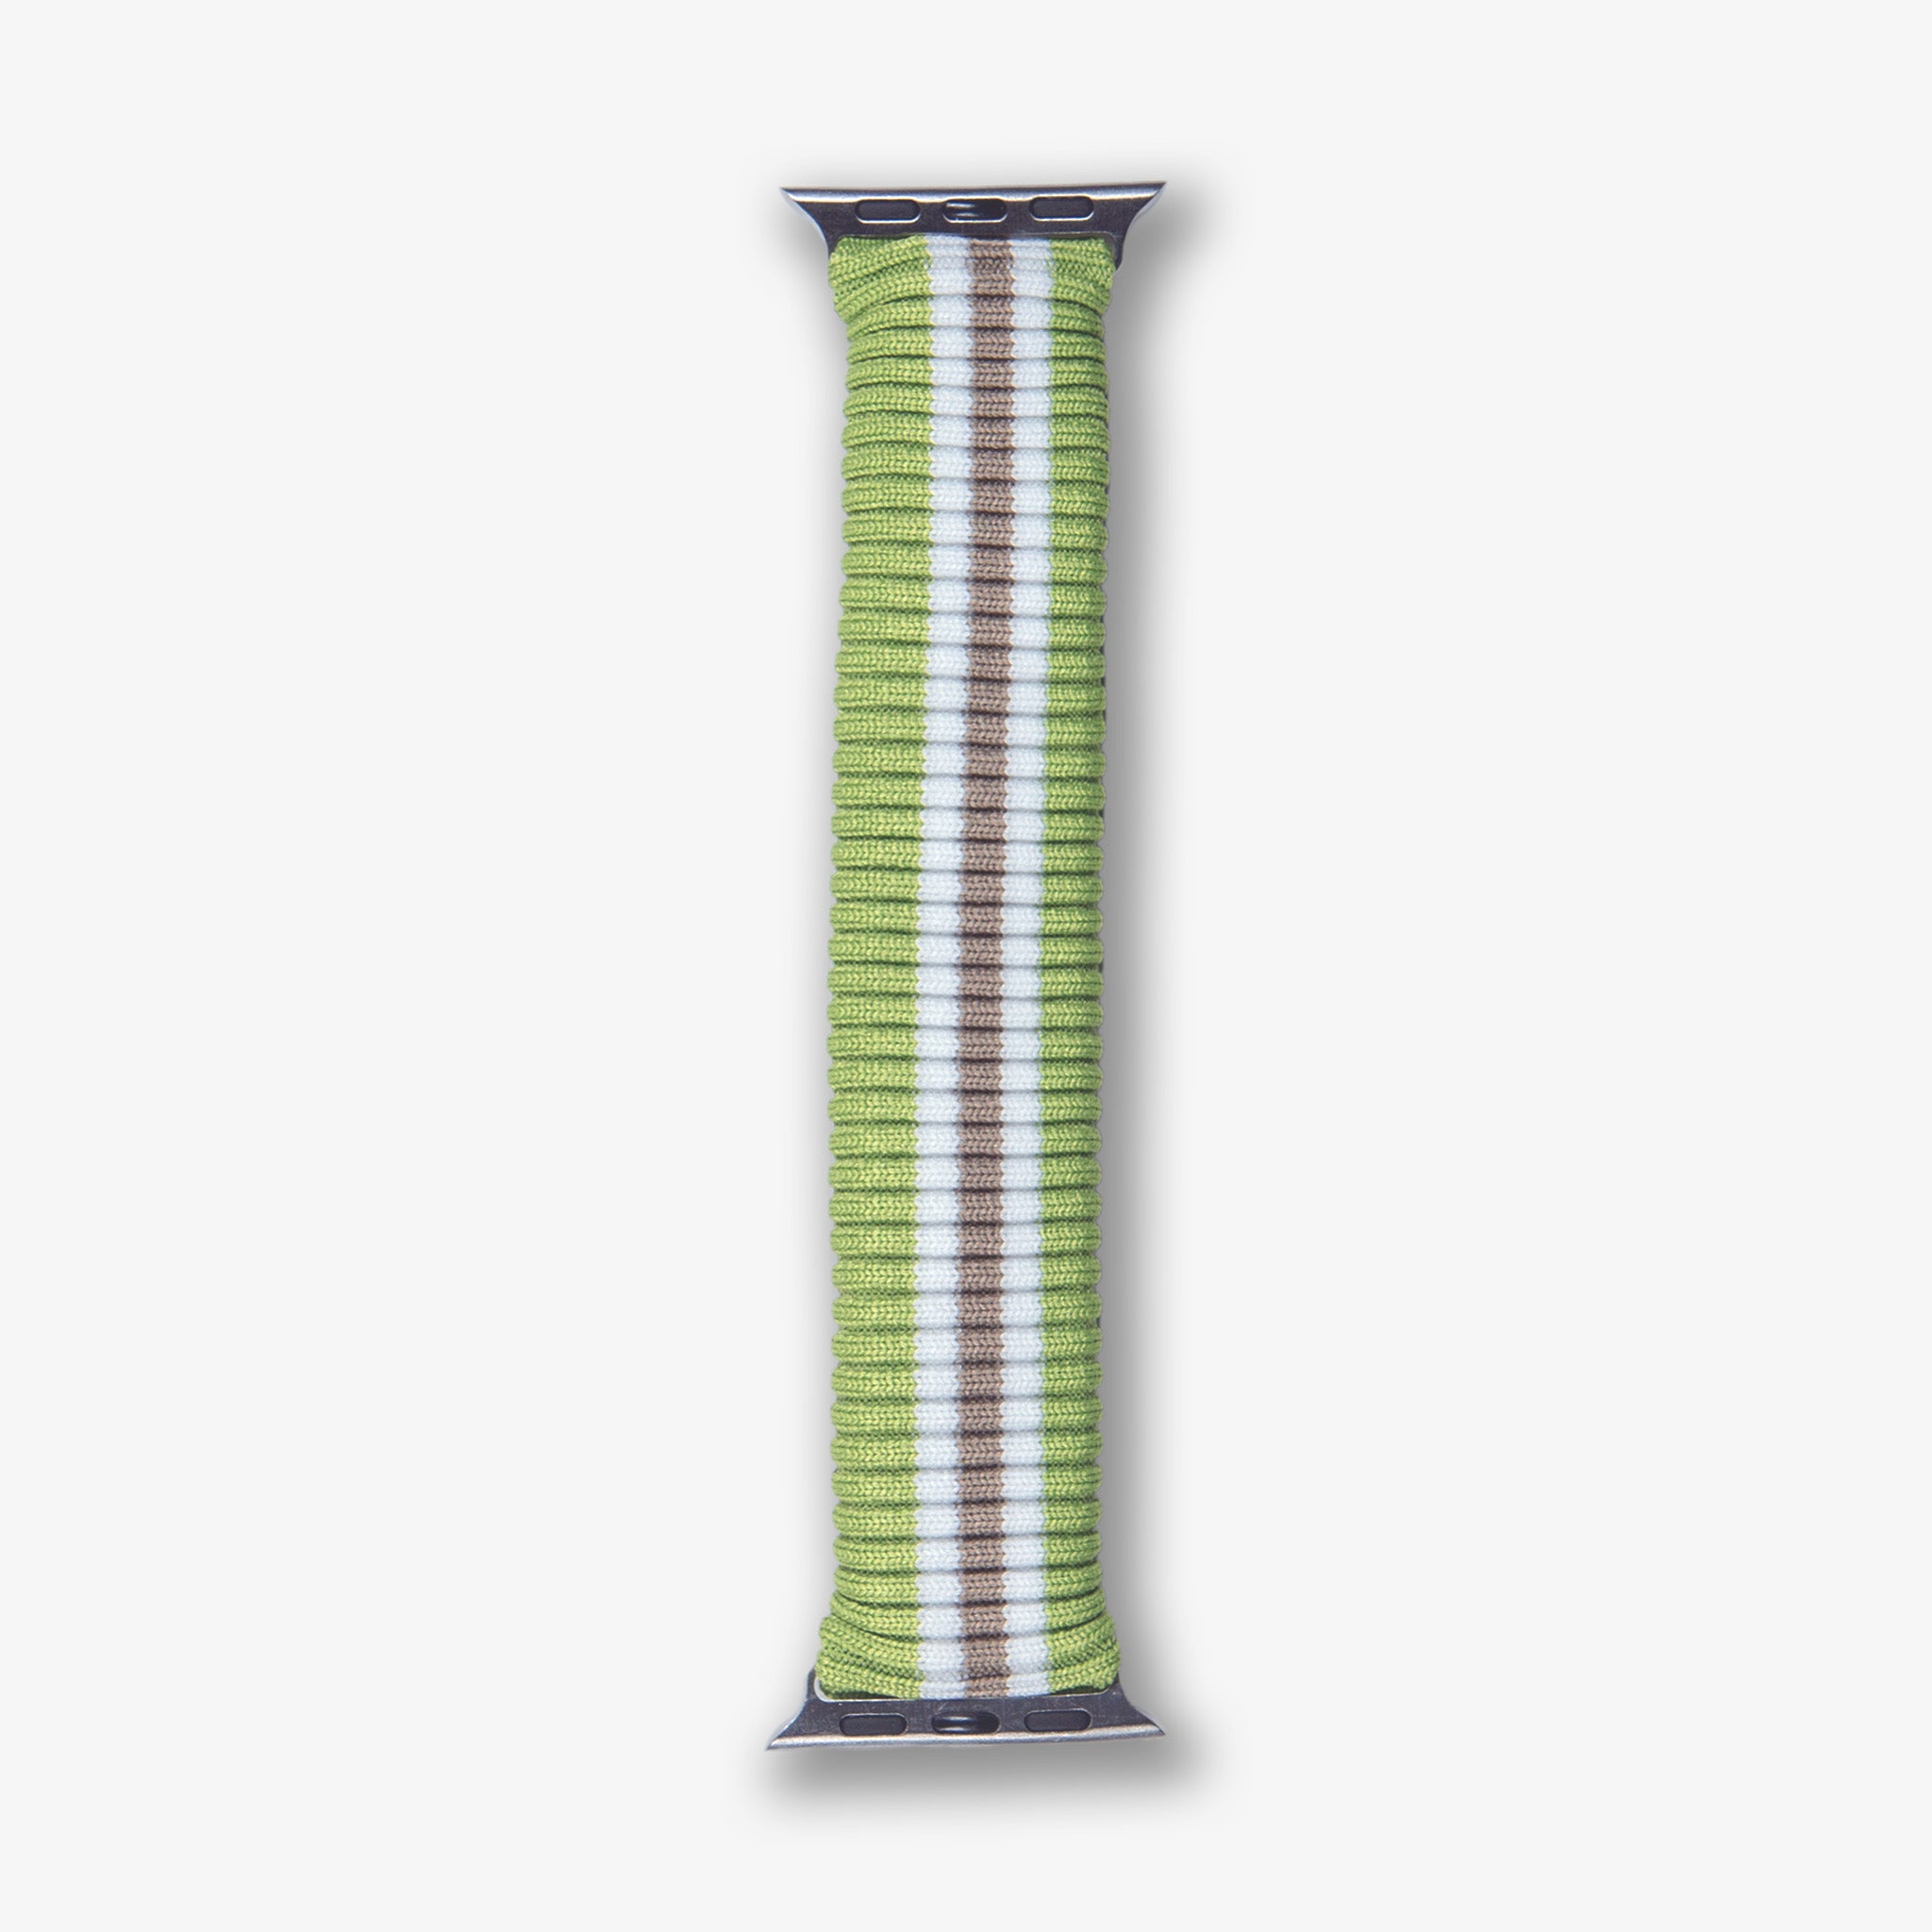 Knit Apple Watch Band - Varsity Green